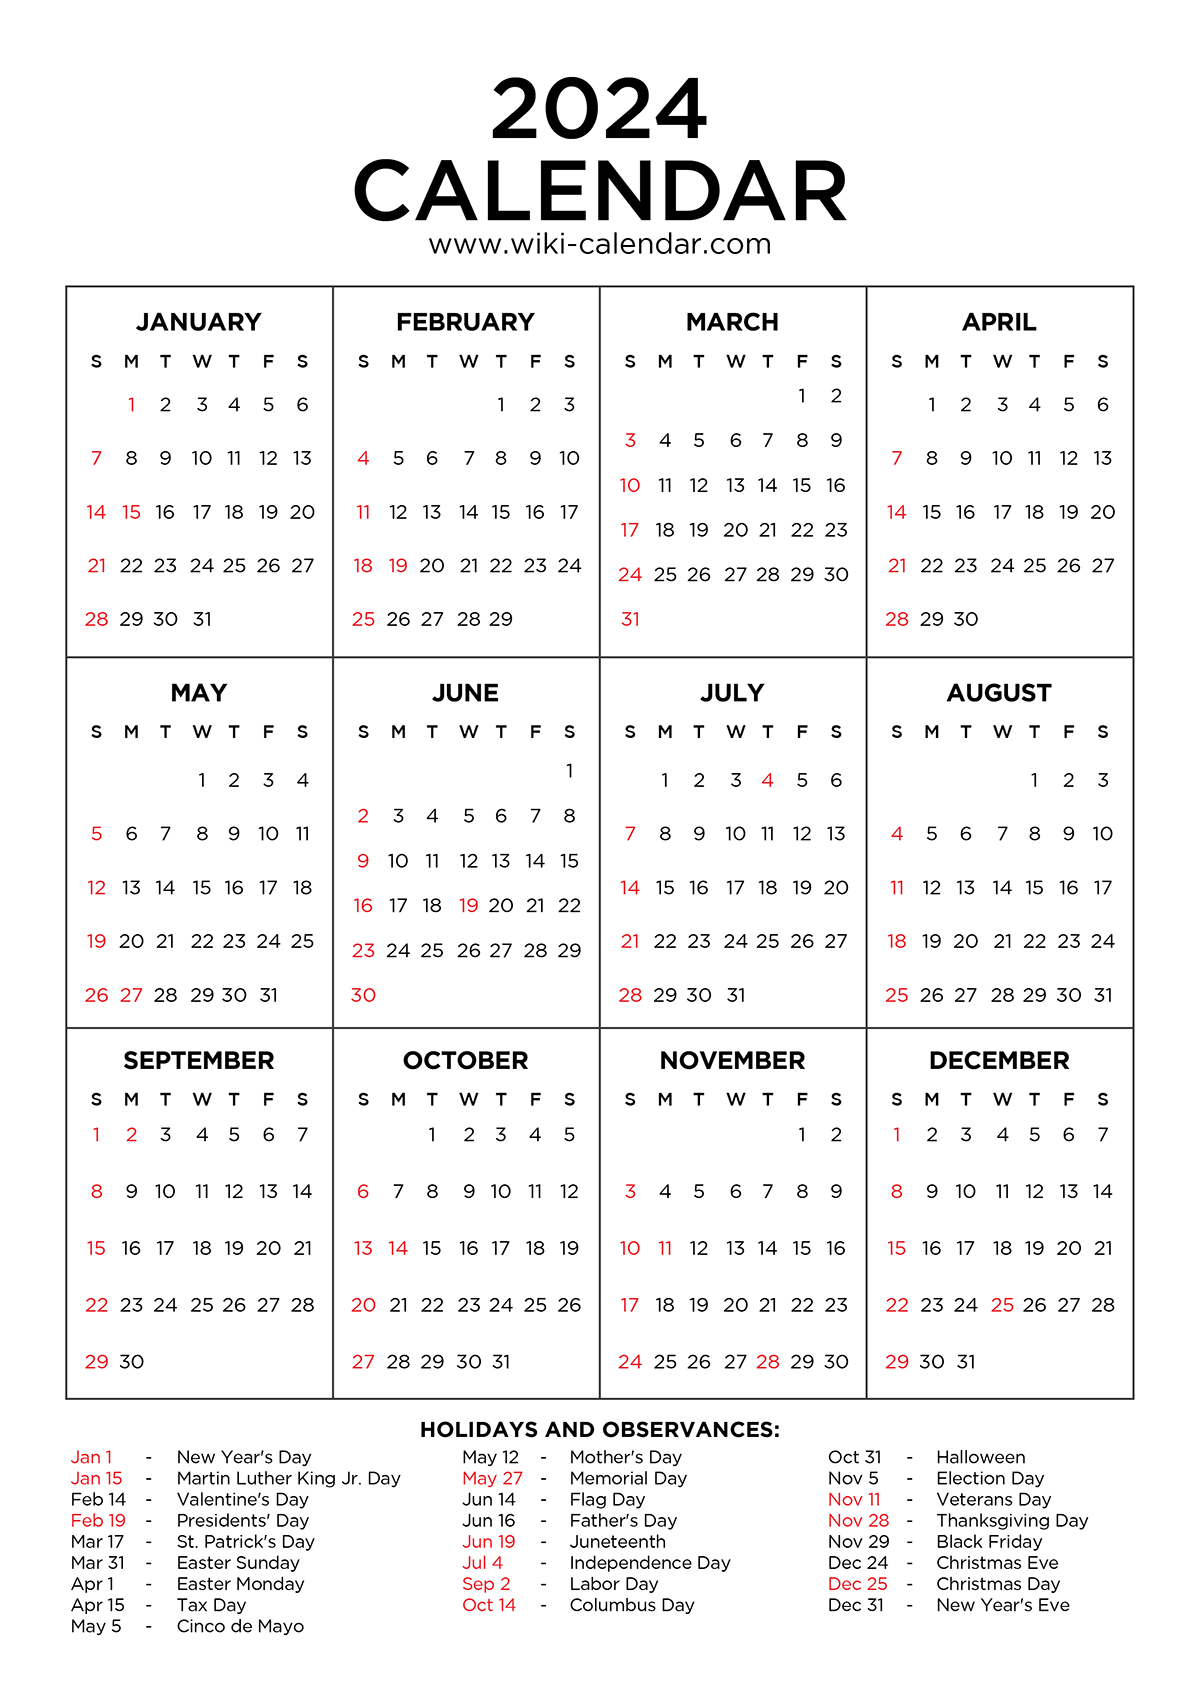 Year 2024 Calendar Printable With Holidays - Wiki Calendar within Free Printable Calendar 2024 Yearly With Holidays